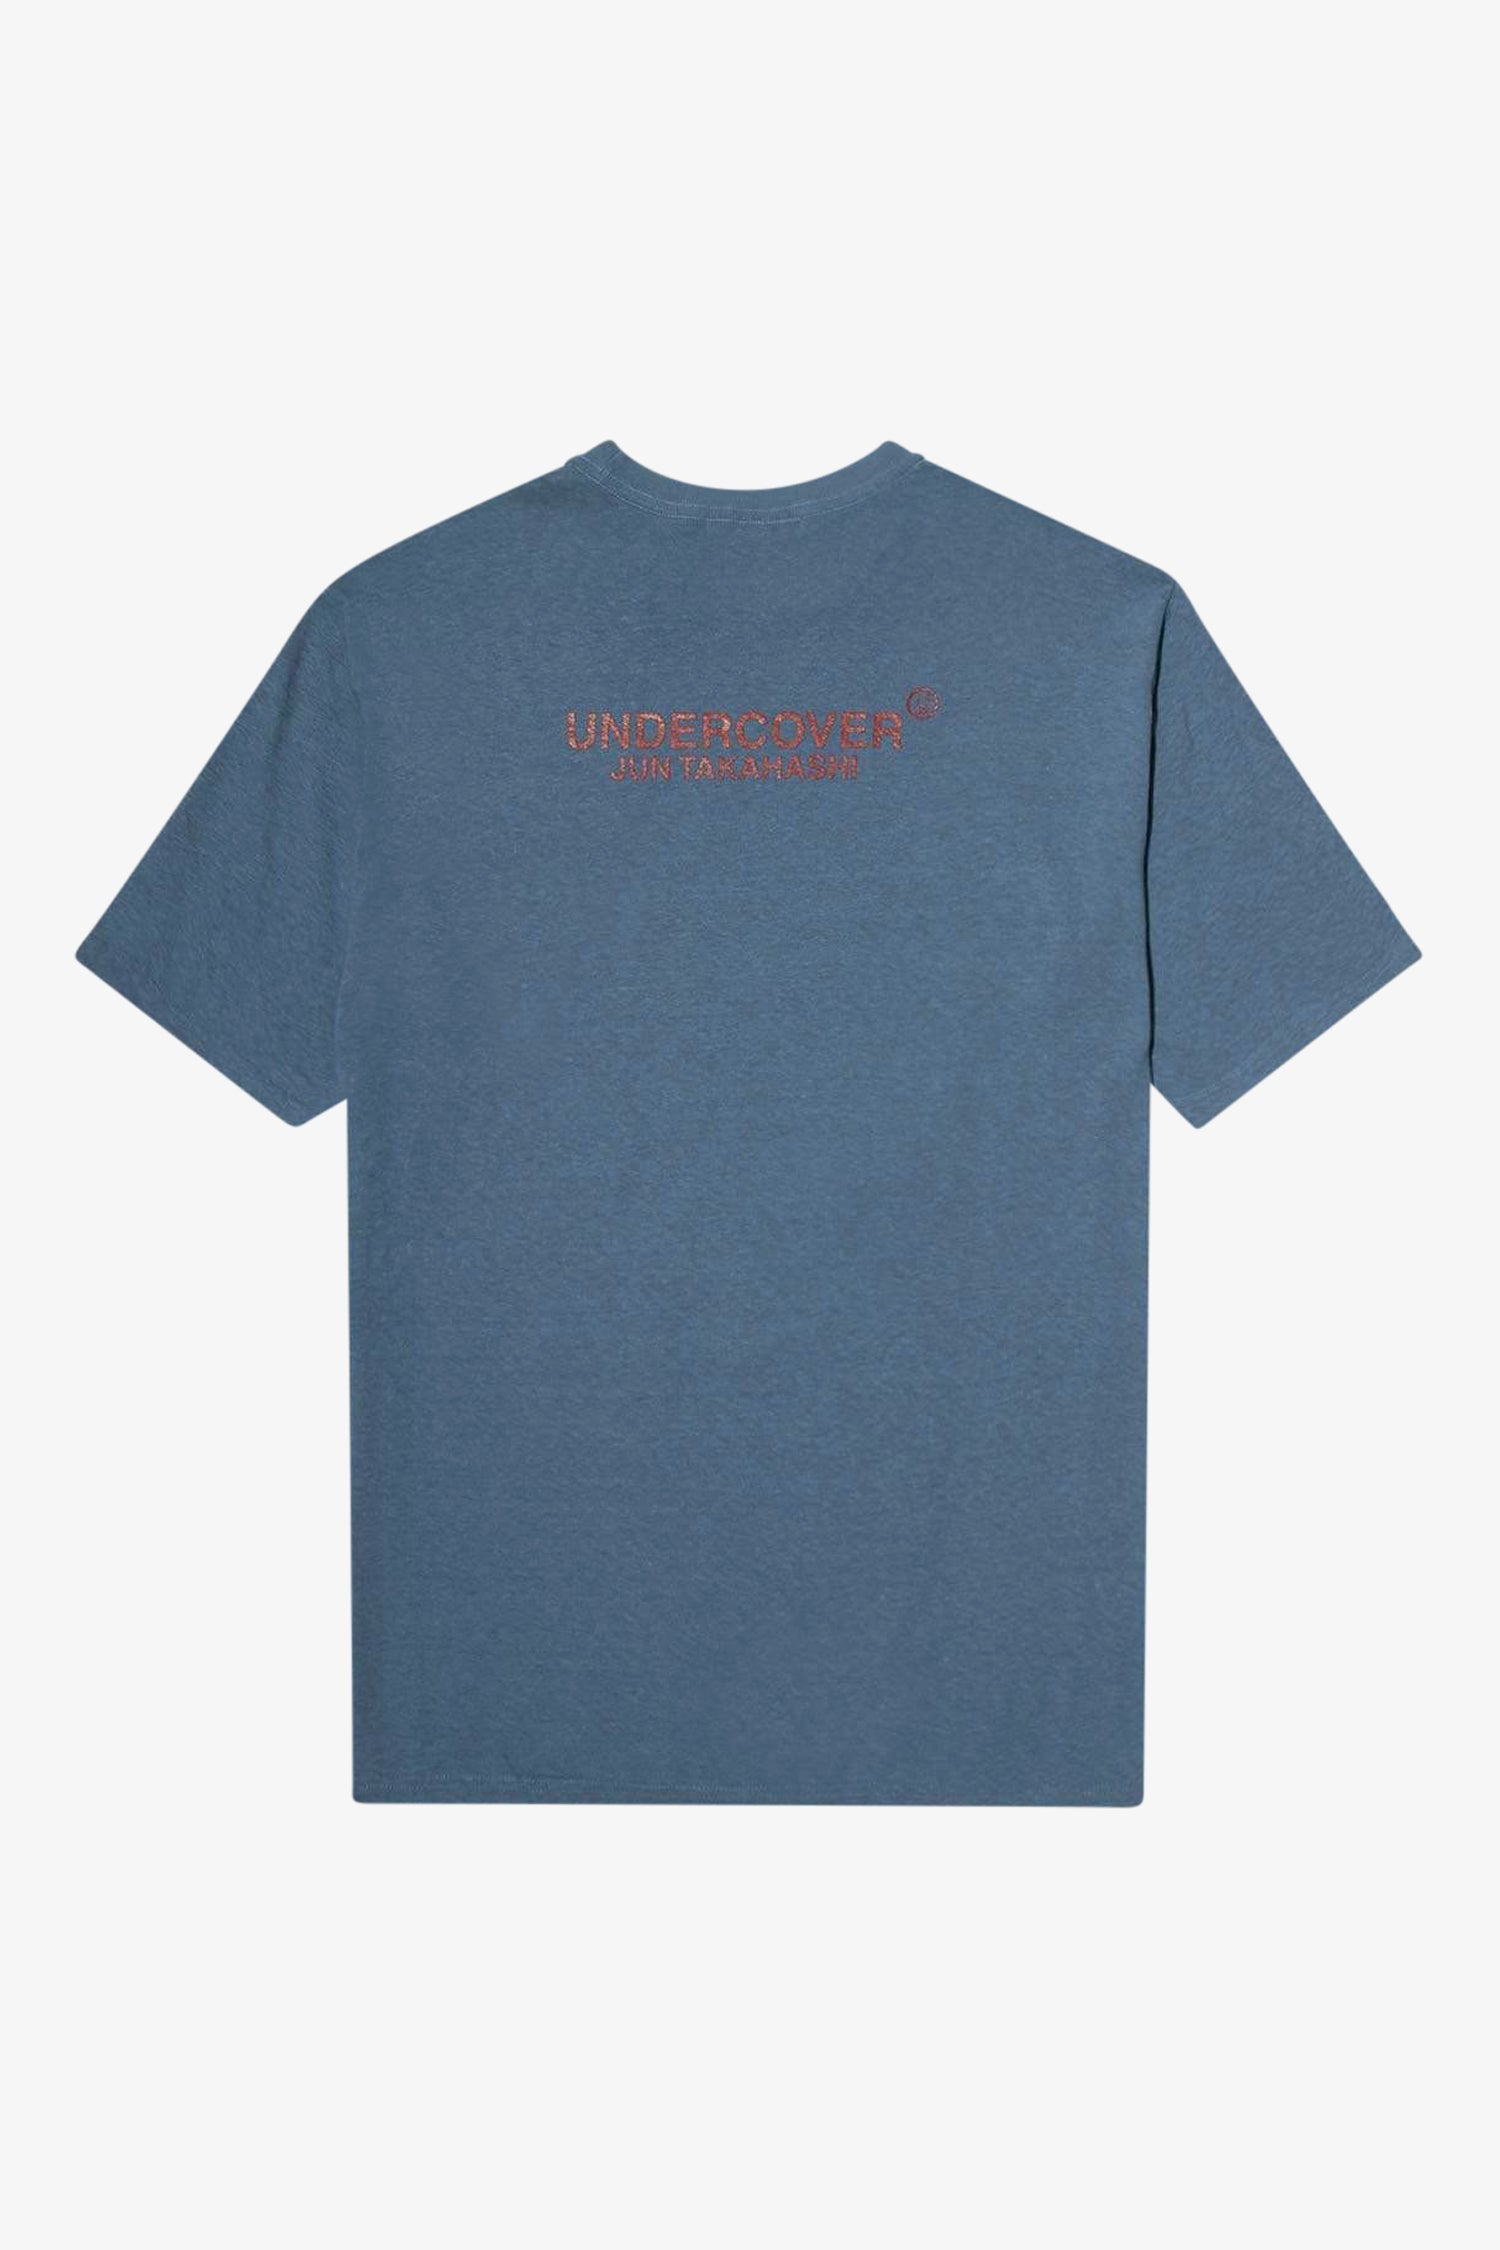 Selectshop FRAME - UNDERCOVER Bat T-Shirt T-Shirt Dubai